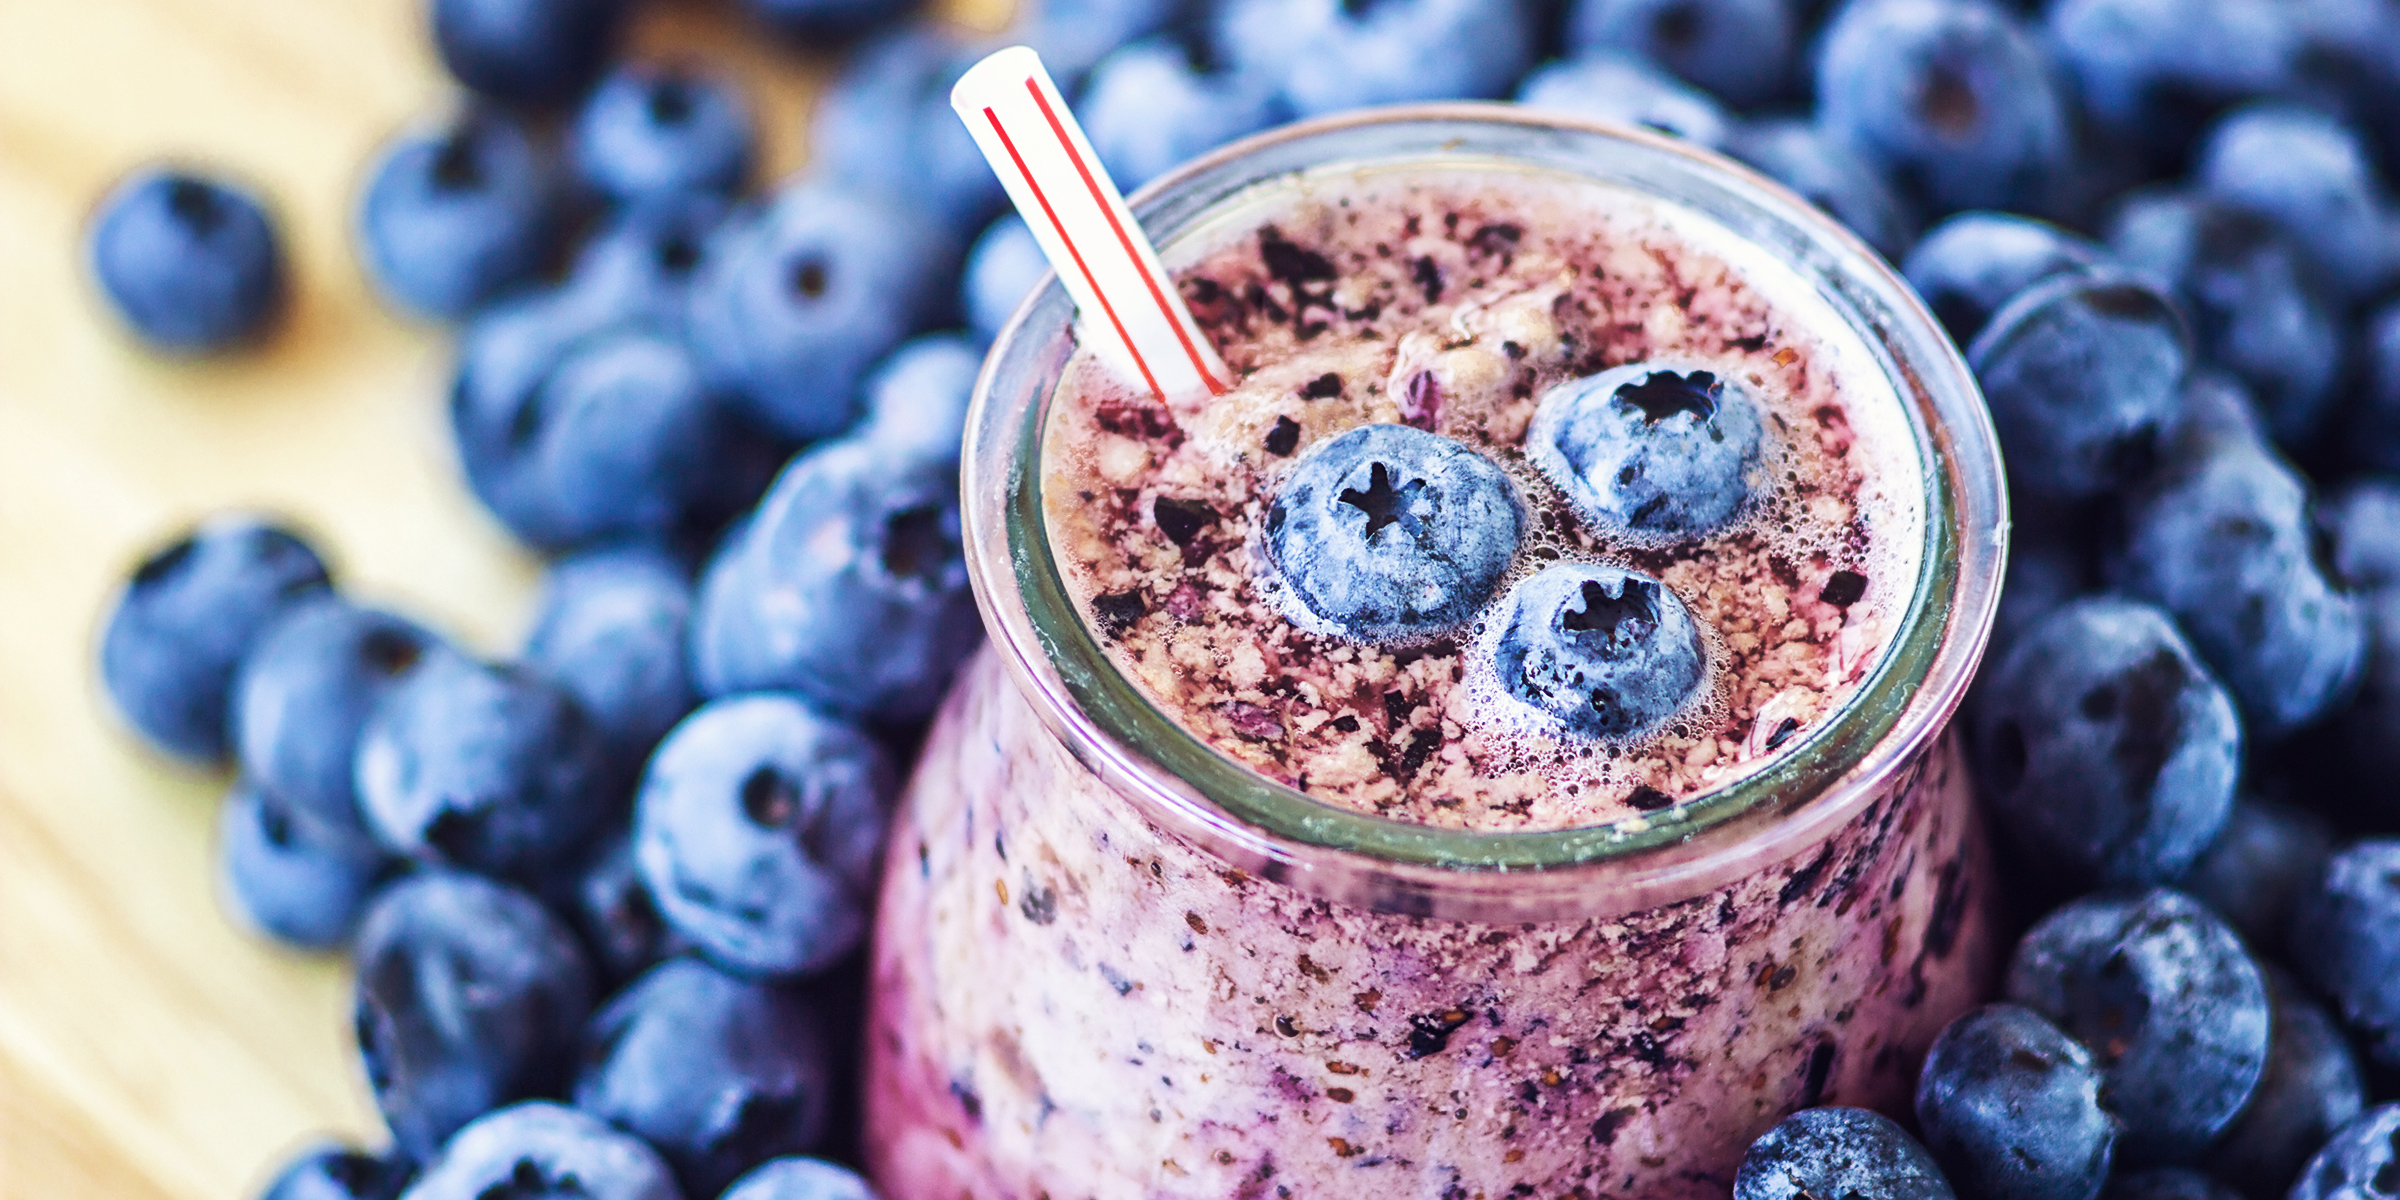 A huckleberry milkshake | Source: Shutterstock